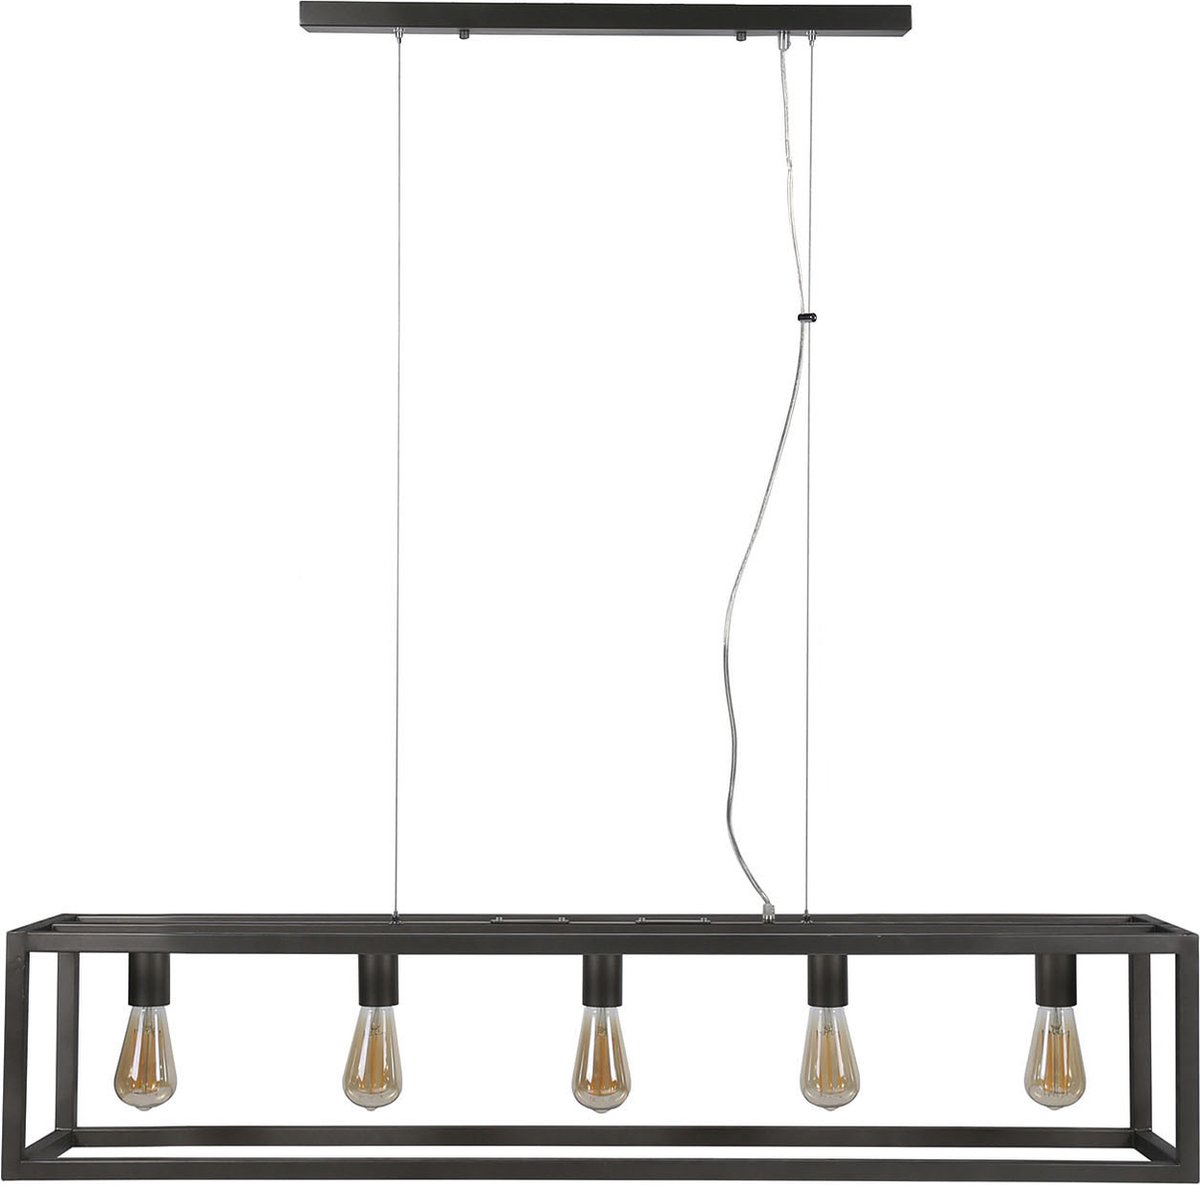 Rectangular - Hanglamp - rechthoekig metalen frame - 5 lichtpunten